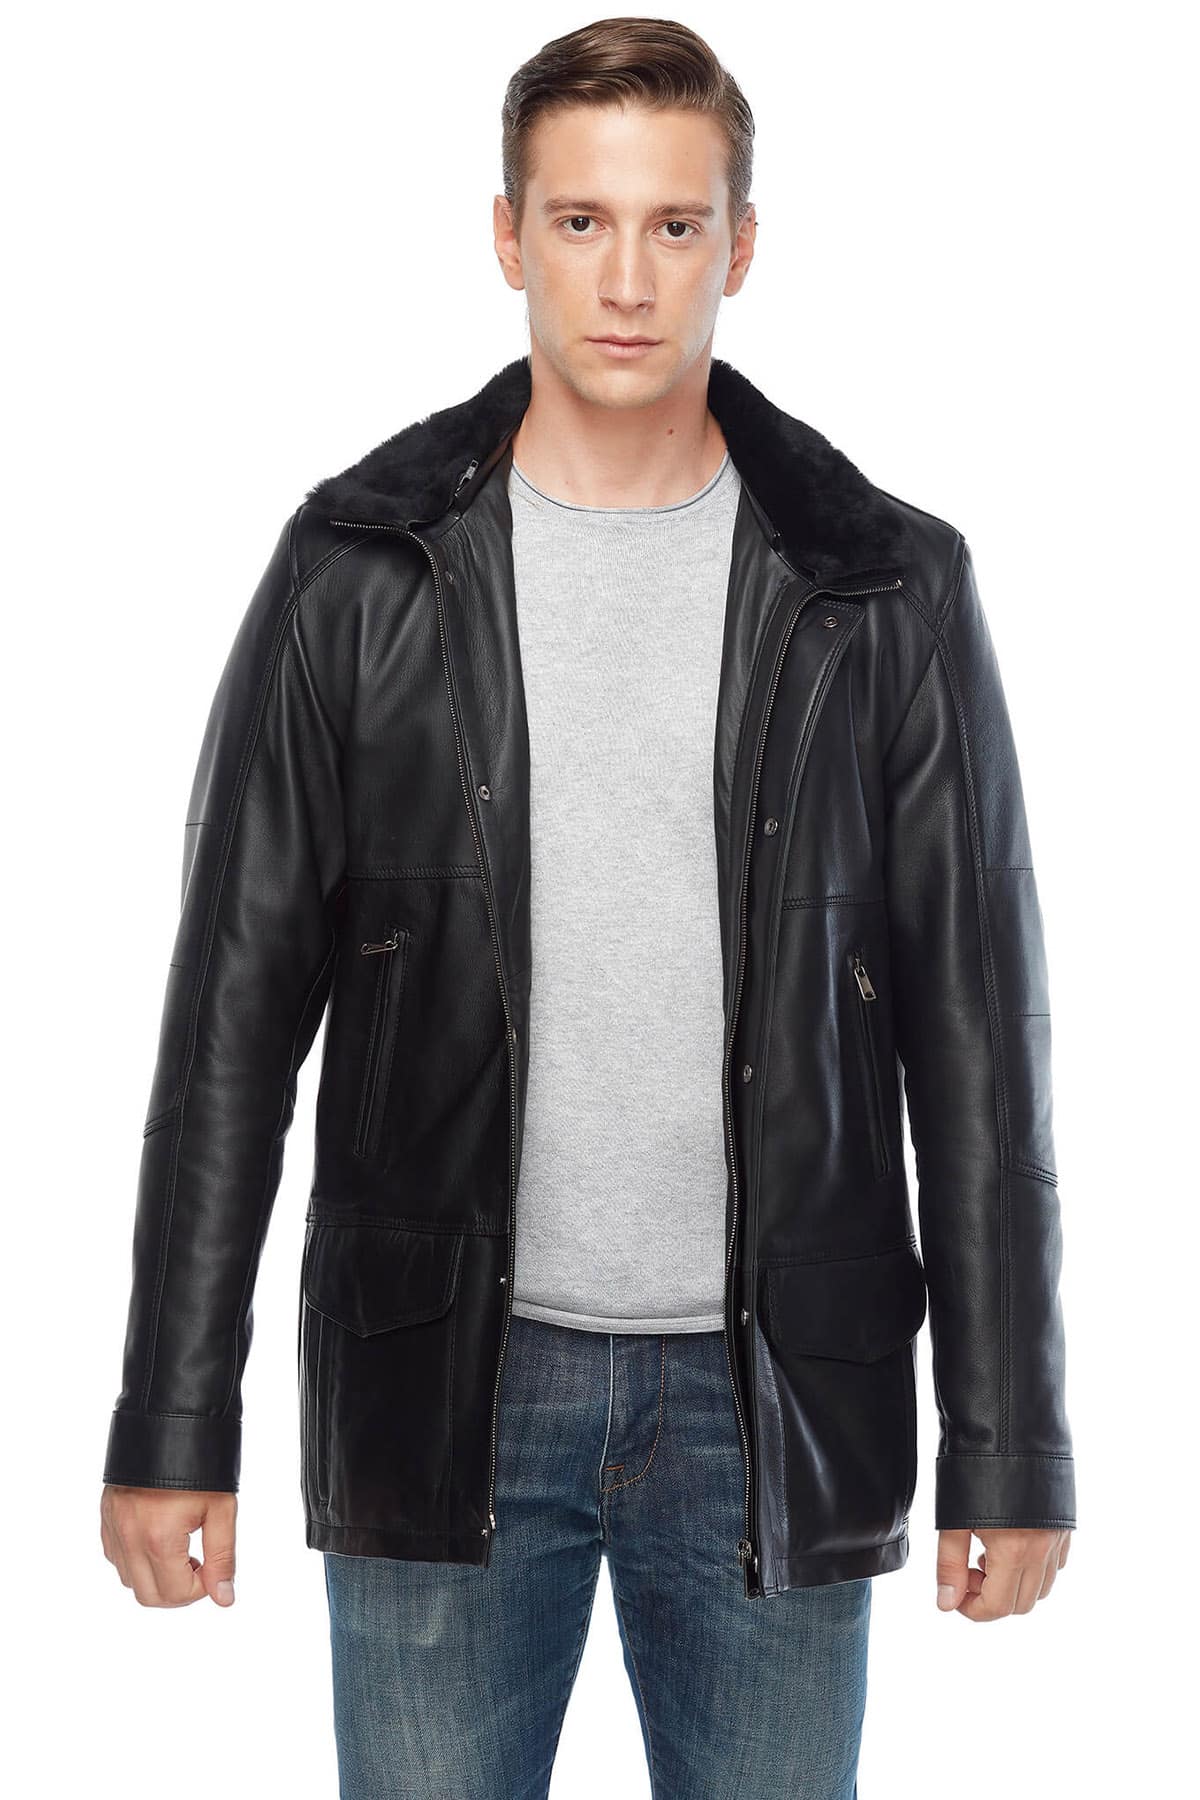 Sam Webb Men's 100 % Real Black Leather Coat